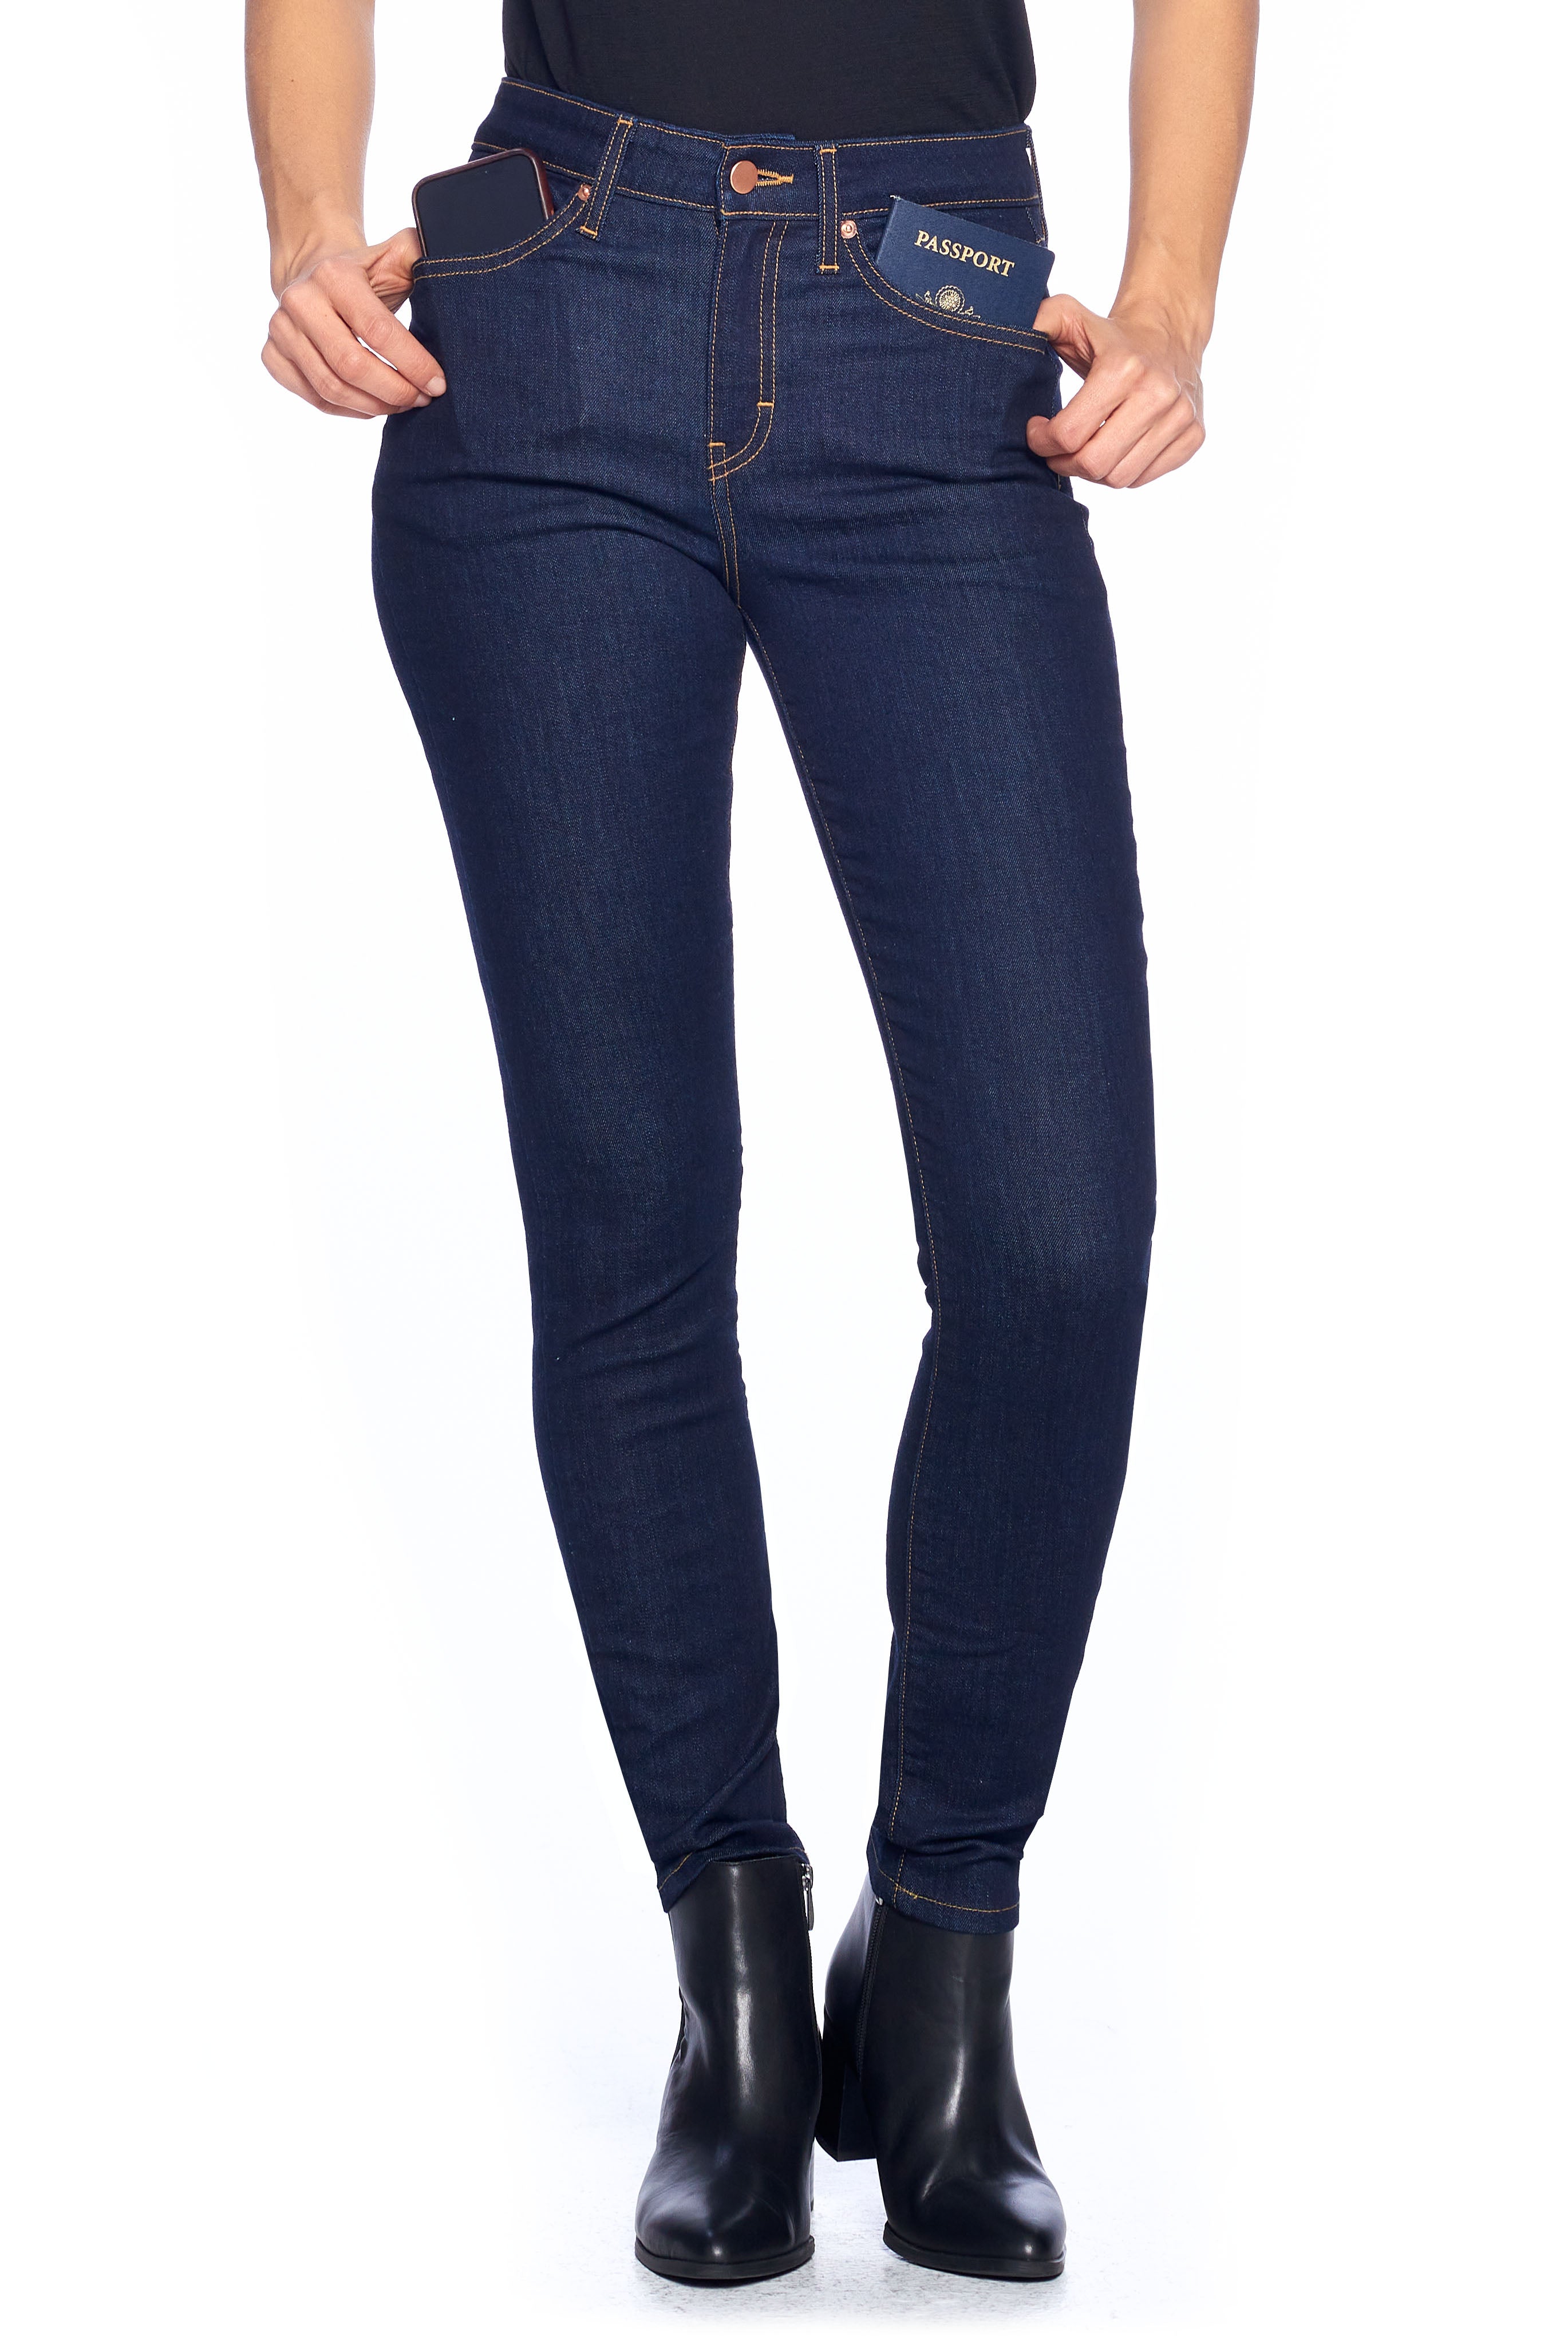 Women's Casual Dark Blue Classic Mid Waist Skinny Pockets Denim Pants  Trousers Jeanswomen's slim bootcut jeans women's low jeans women's jeans  size 12 women's - Walmart.com